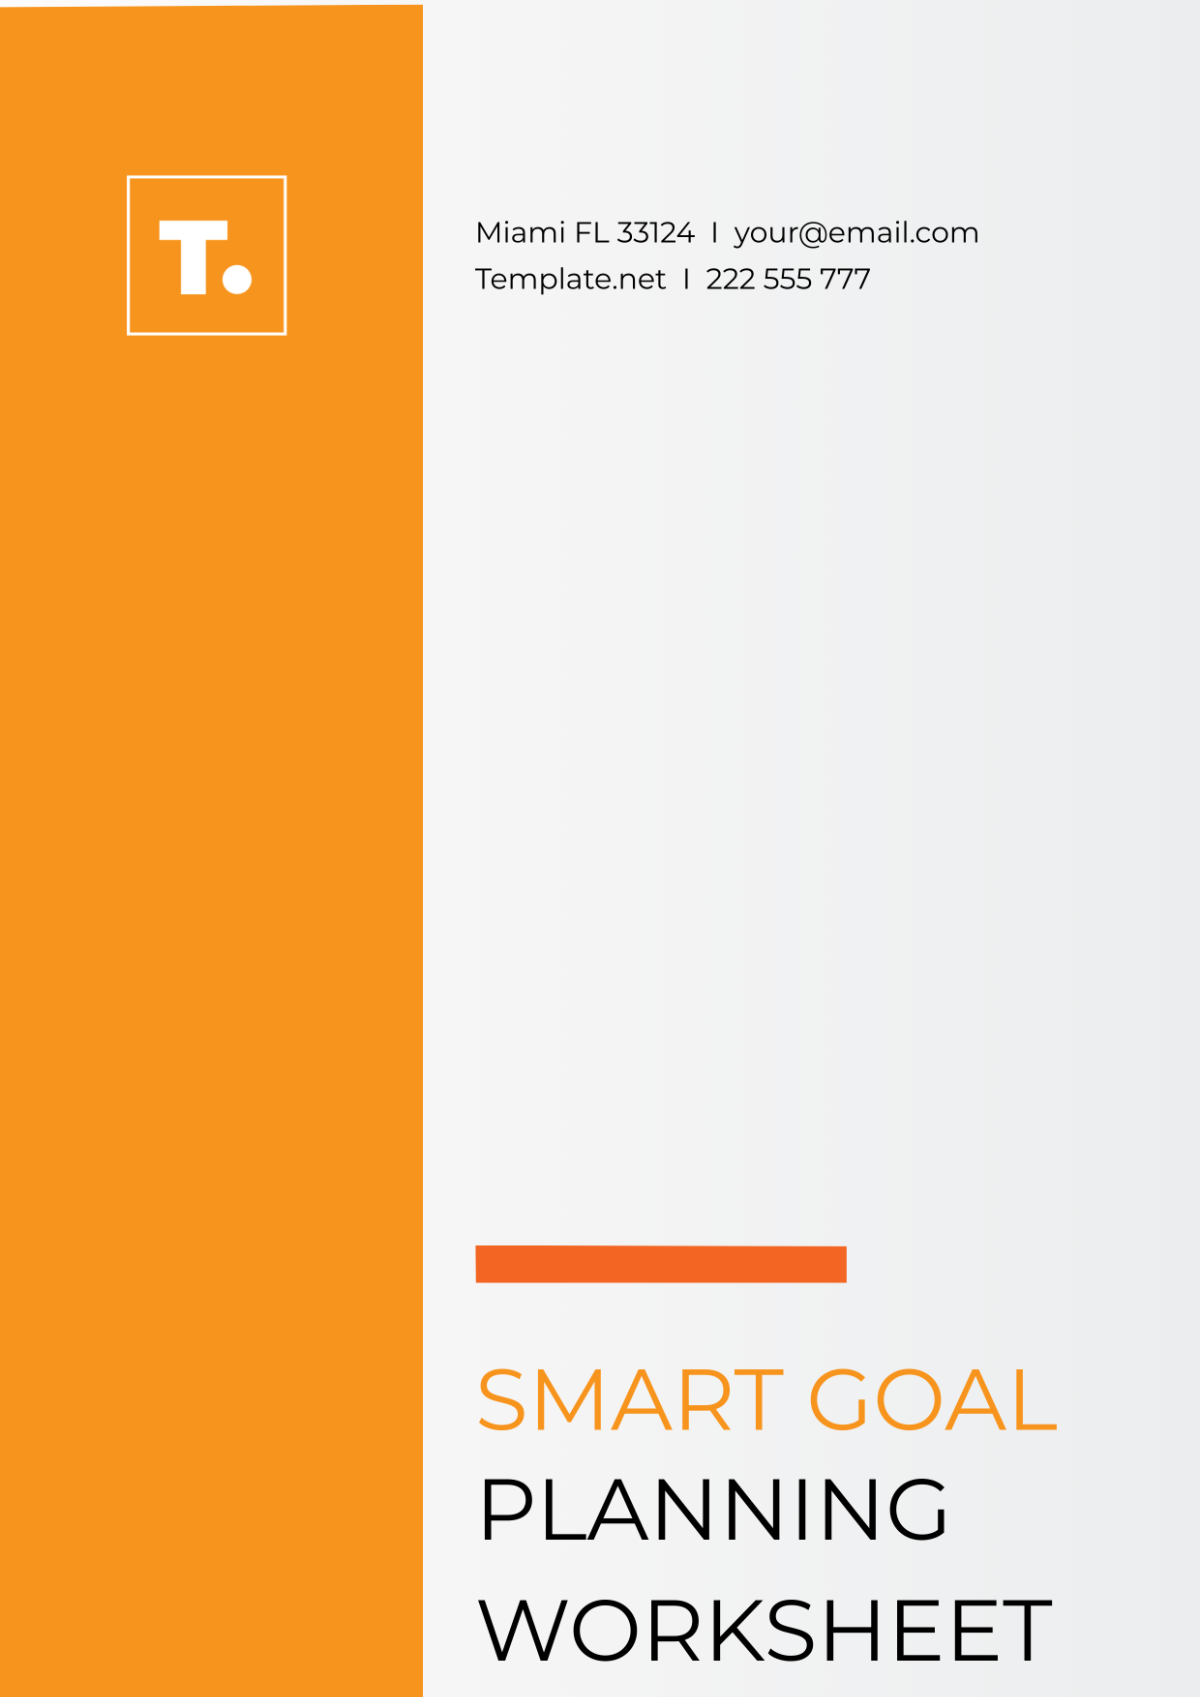 SMART Goal Planning Worksheet Template